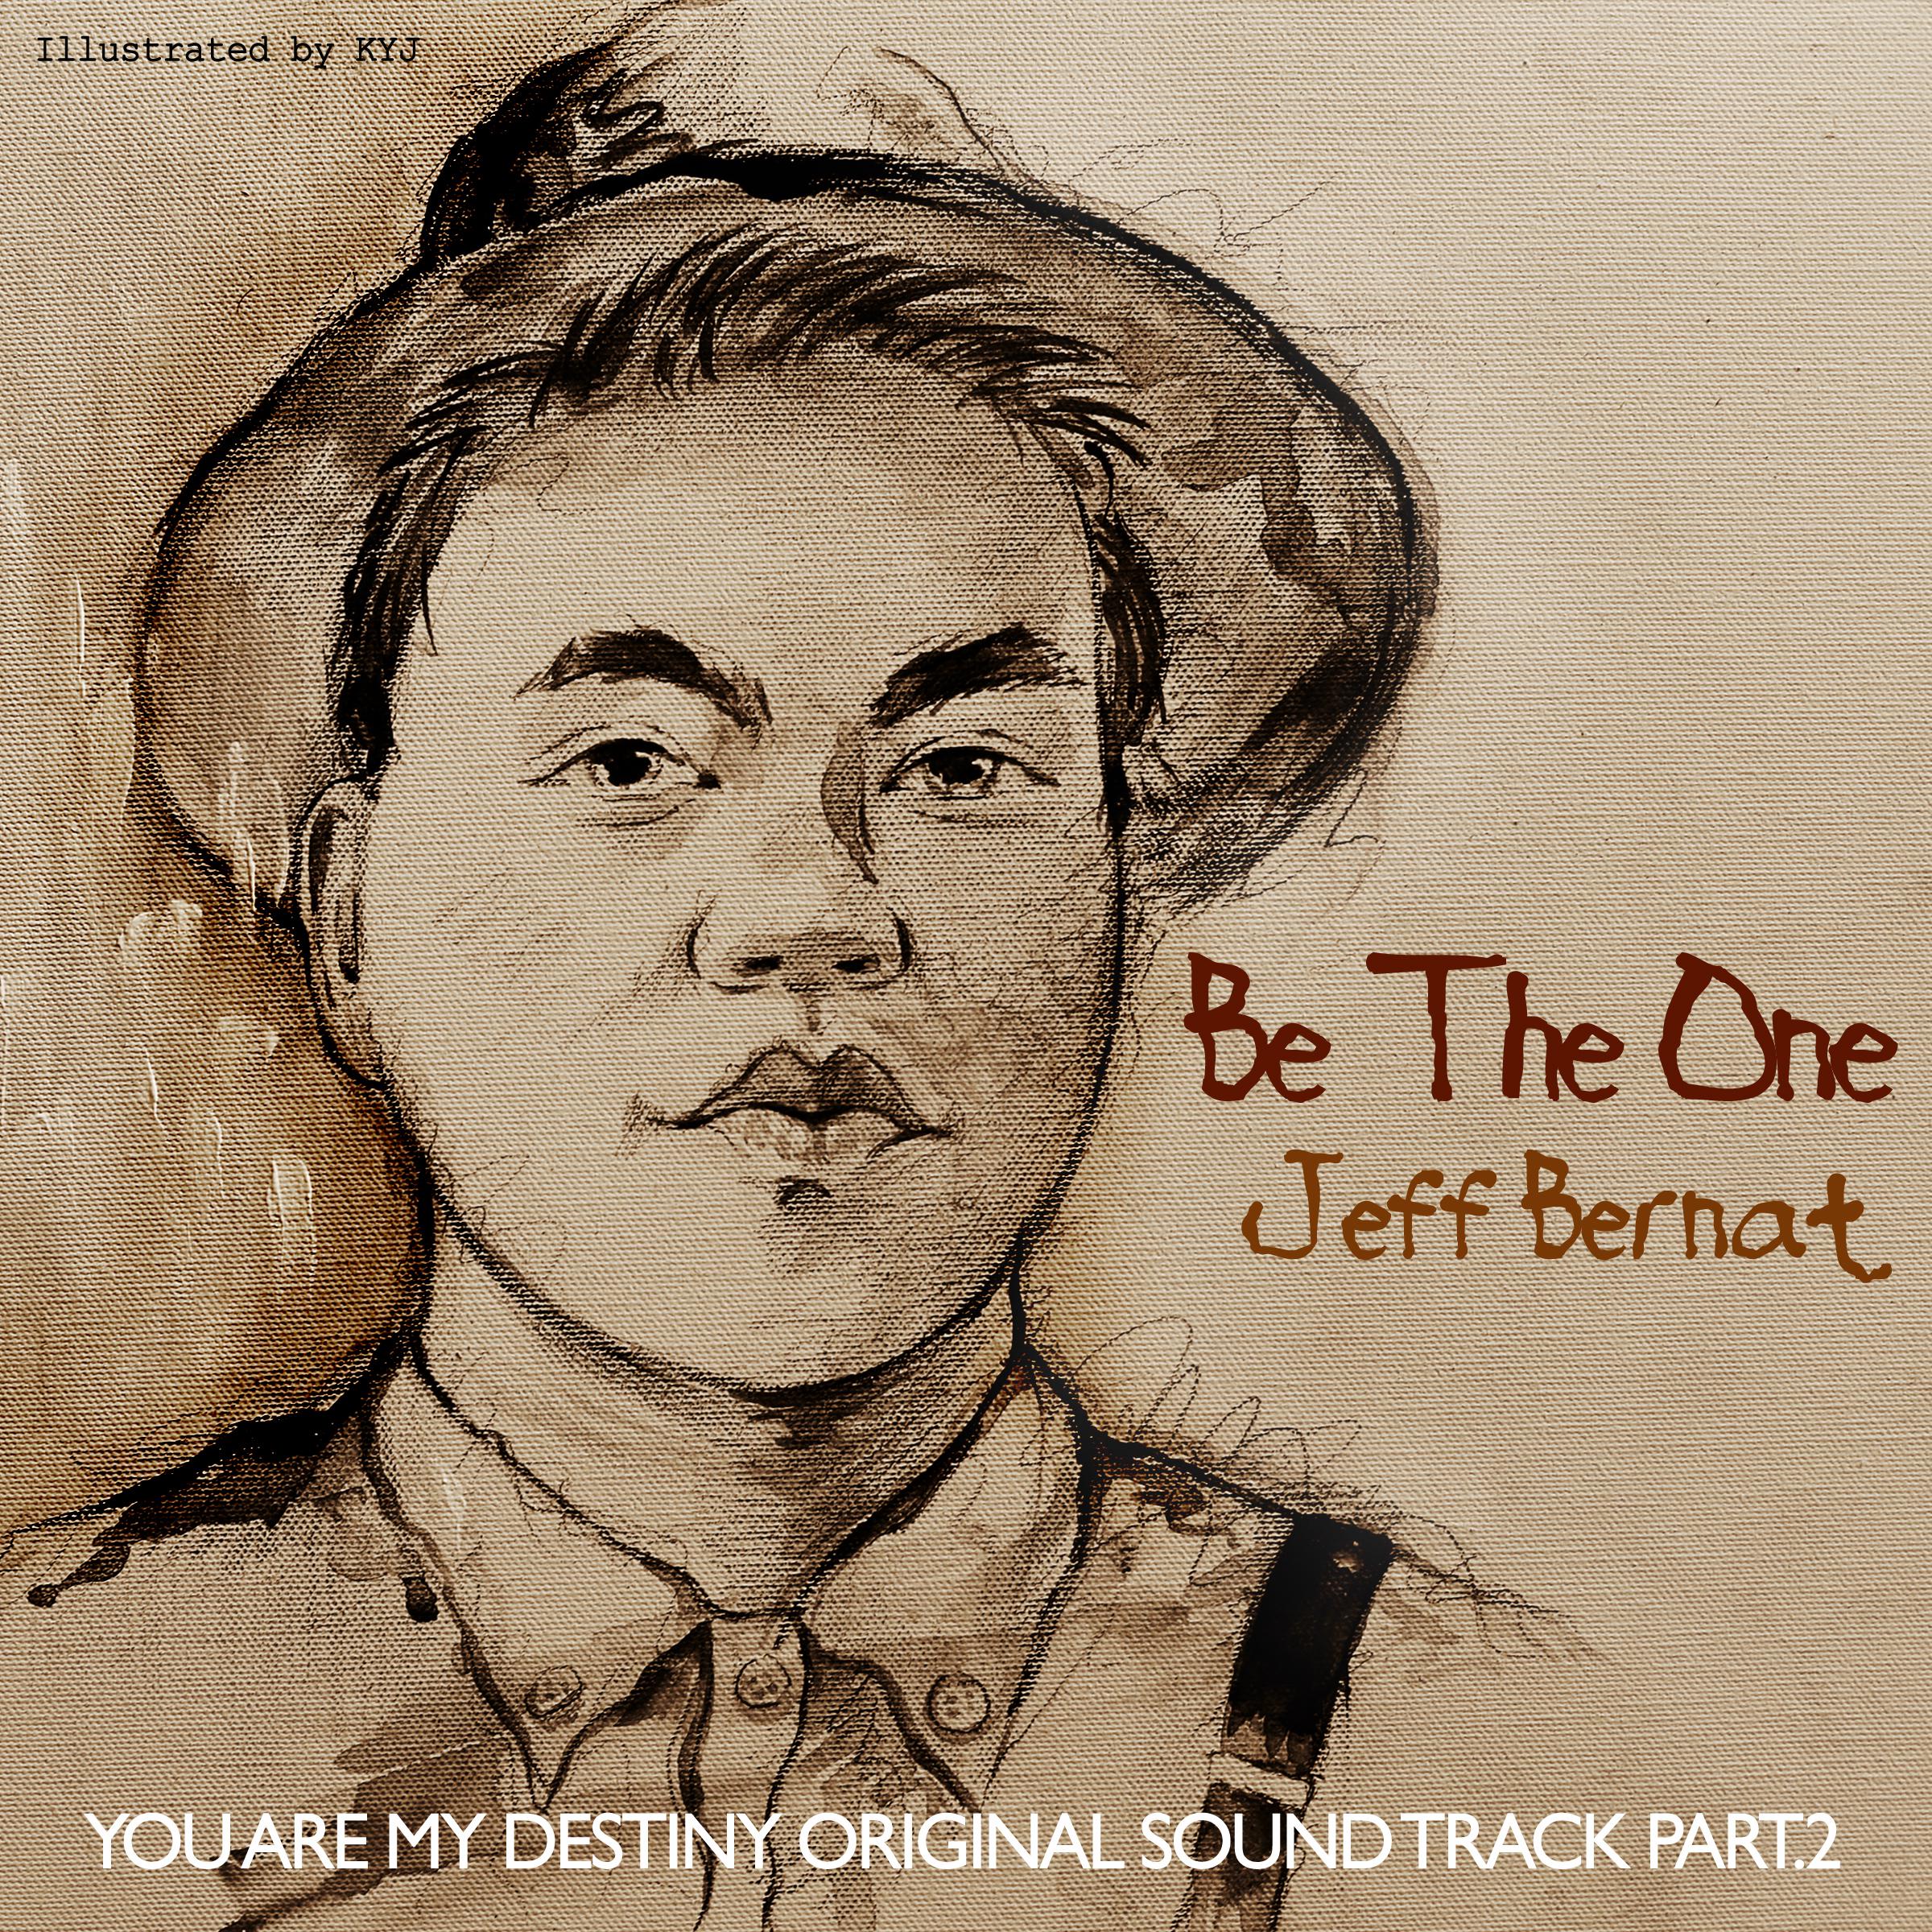 Jeff Bernat - Be The One